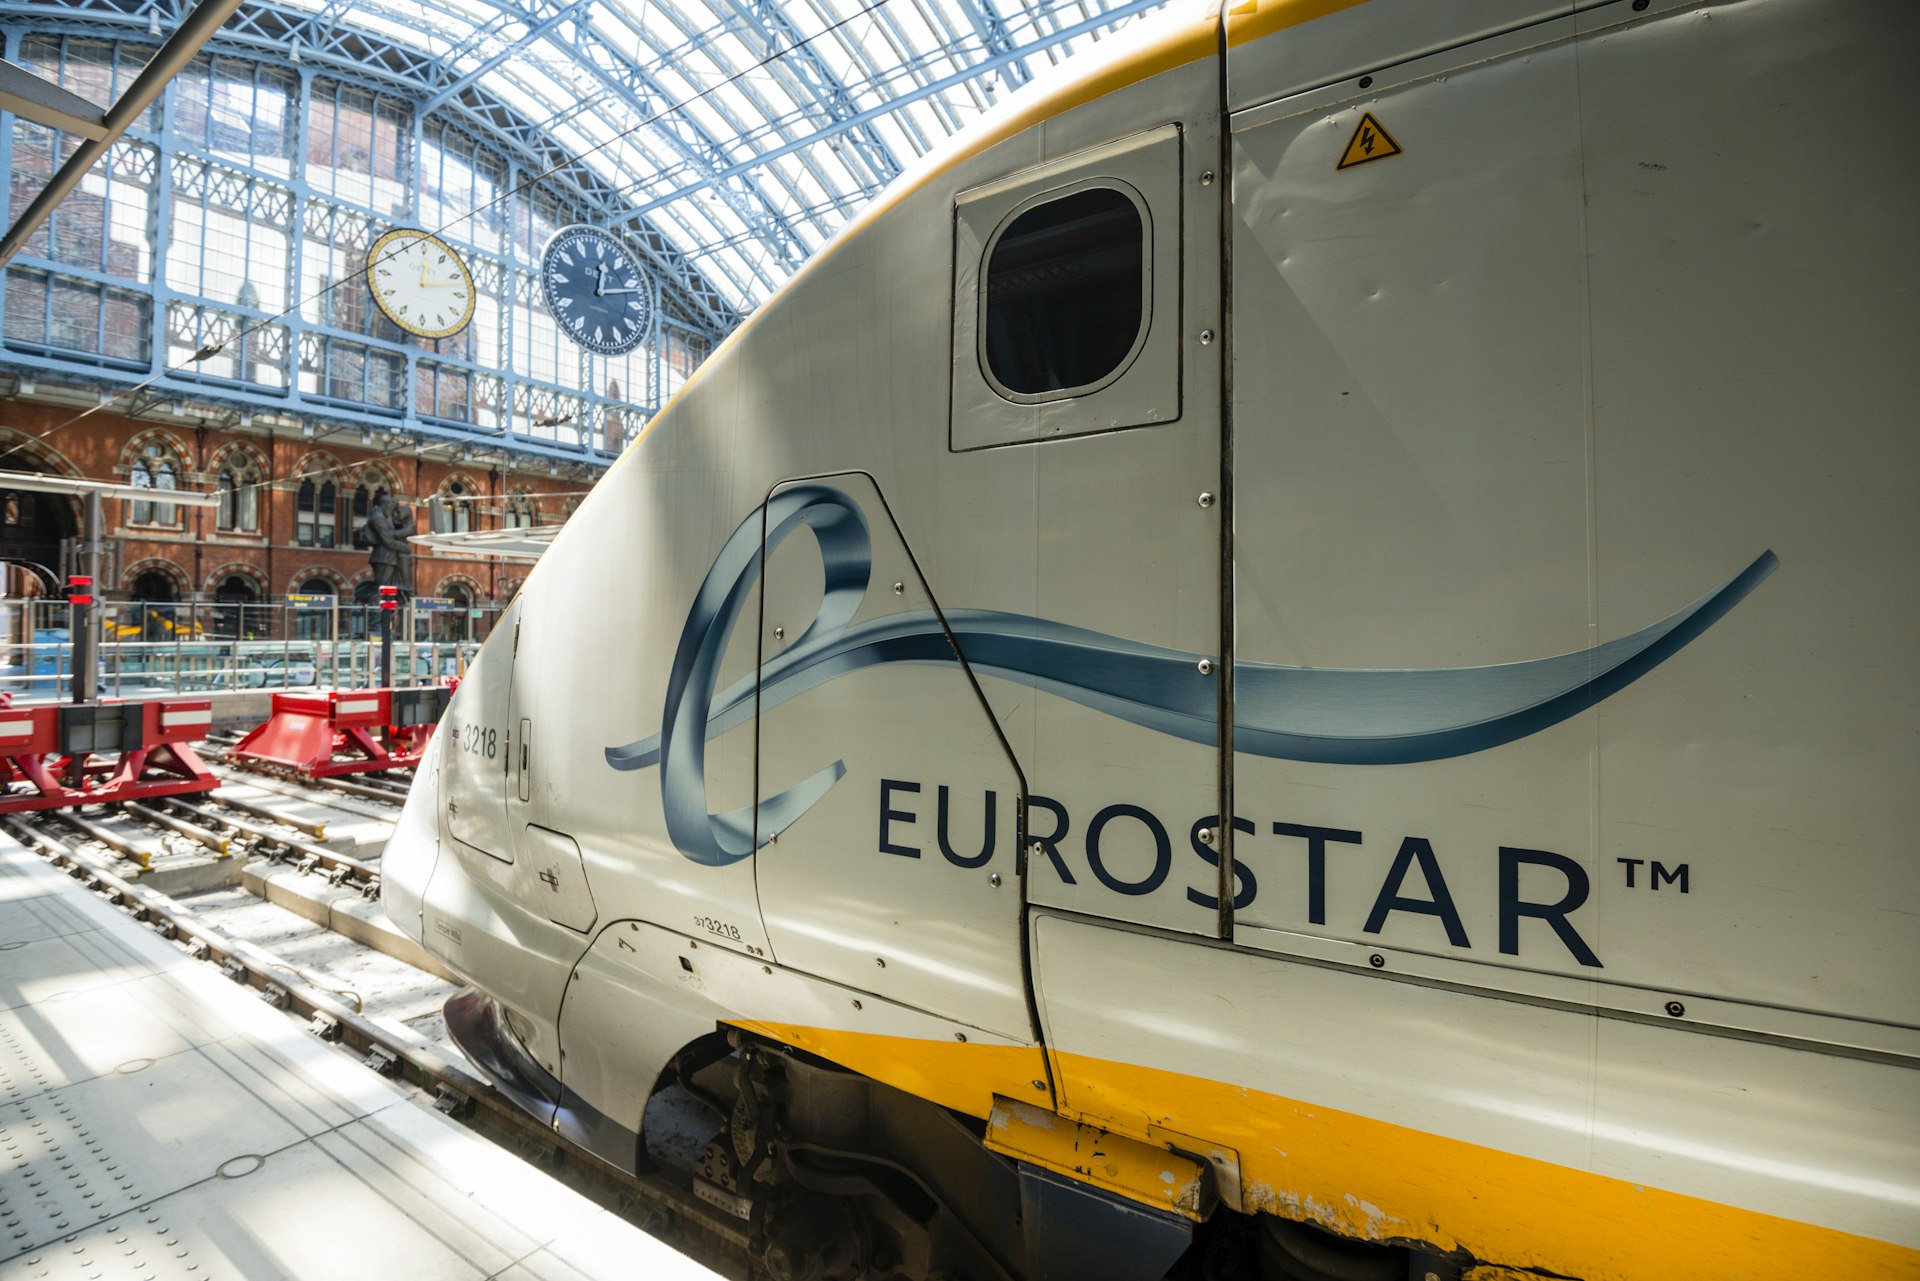 Eurostar train at St Pancras Station, London